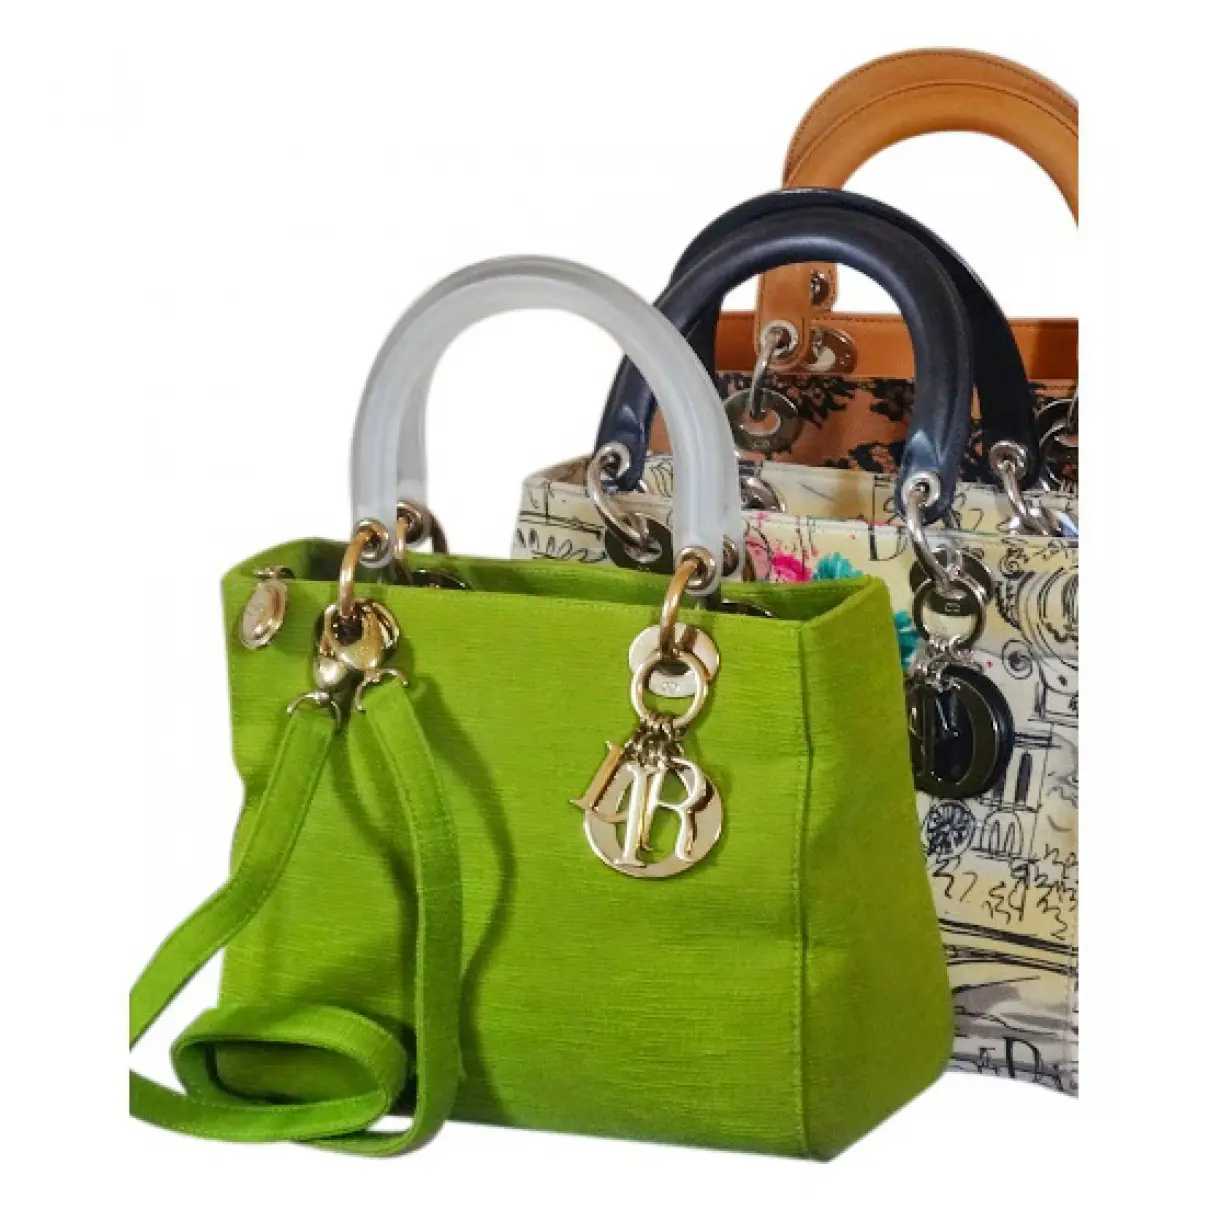 Buy Dior Green Handbag online